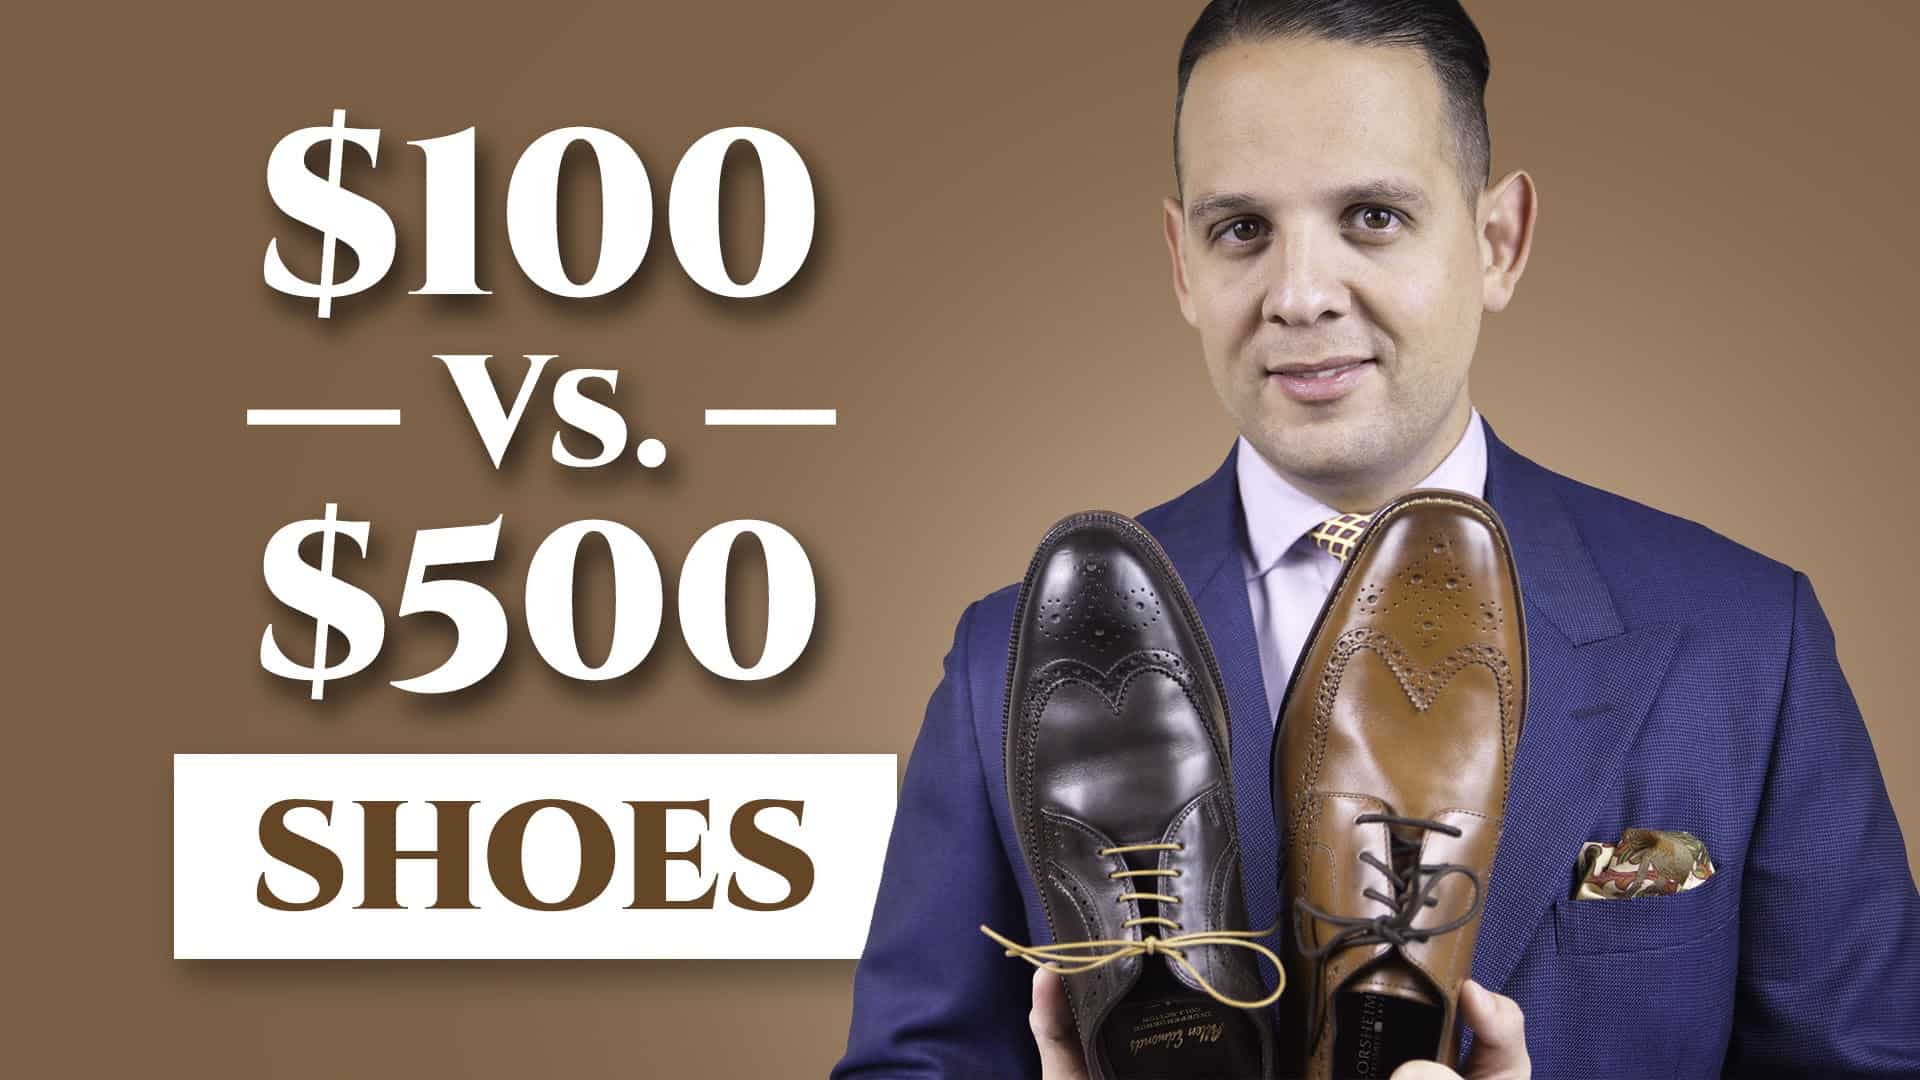 100 USD vs. 500 USD Dress Shoes